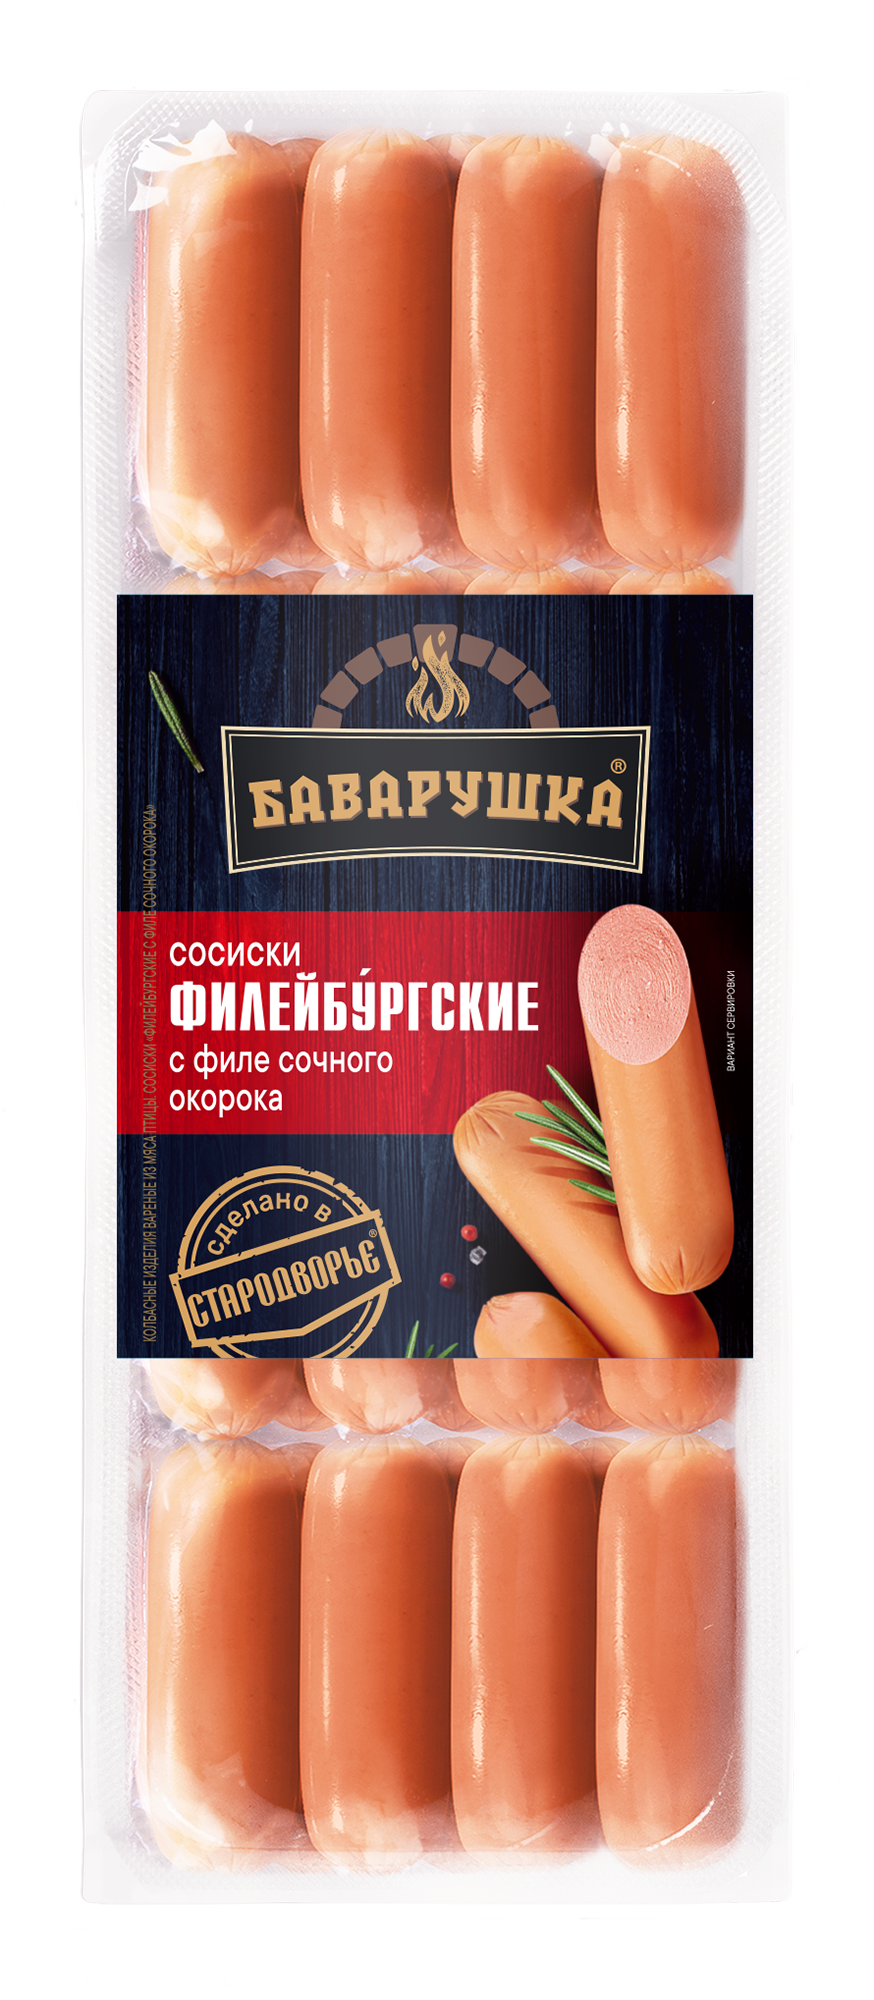 Сосиски Баварушка Филейбургские с филе сочного окорока 0,6 кг